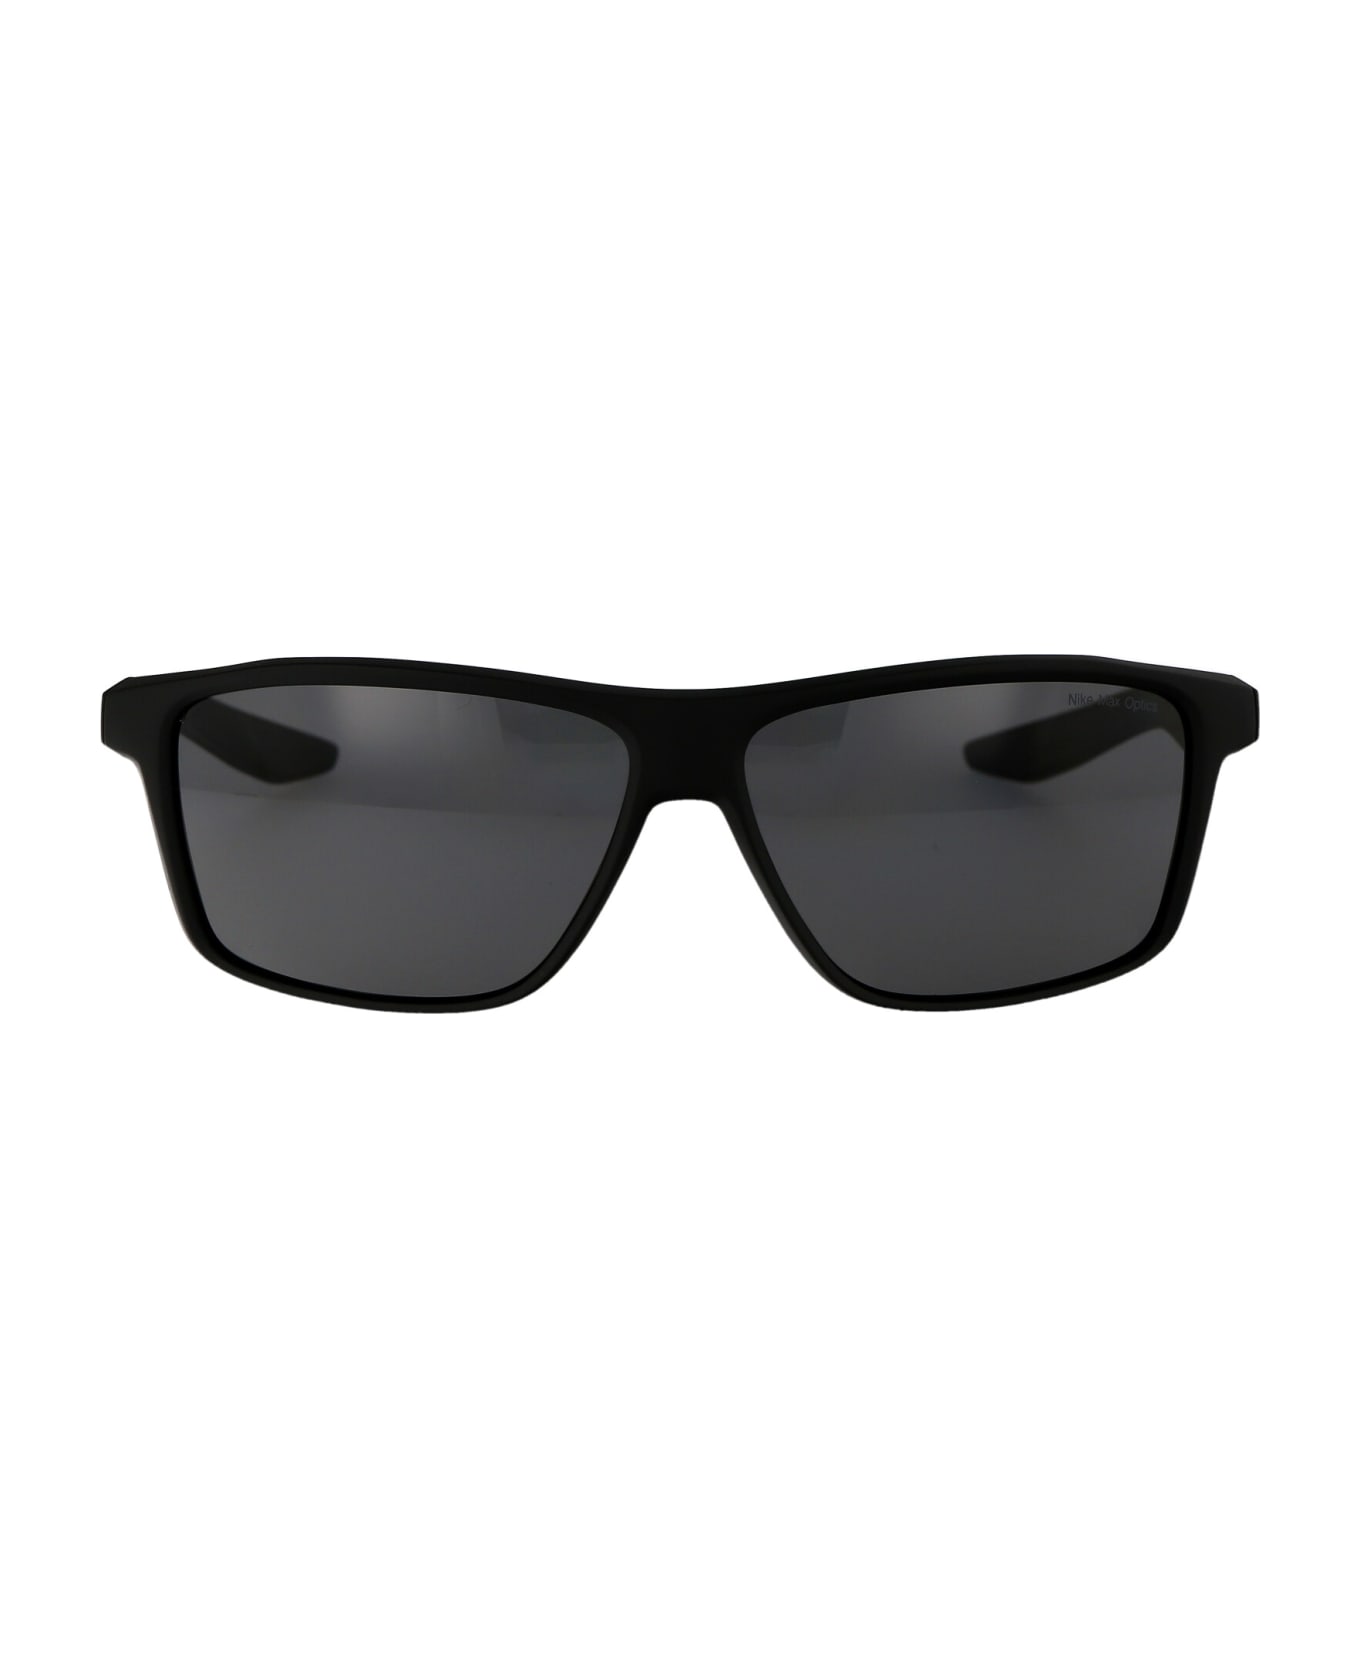 Nike Premier Sunglasses - 001 DARK GREY BLACK/ ANTHRACITE サングラス